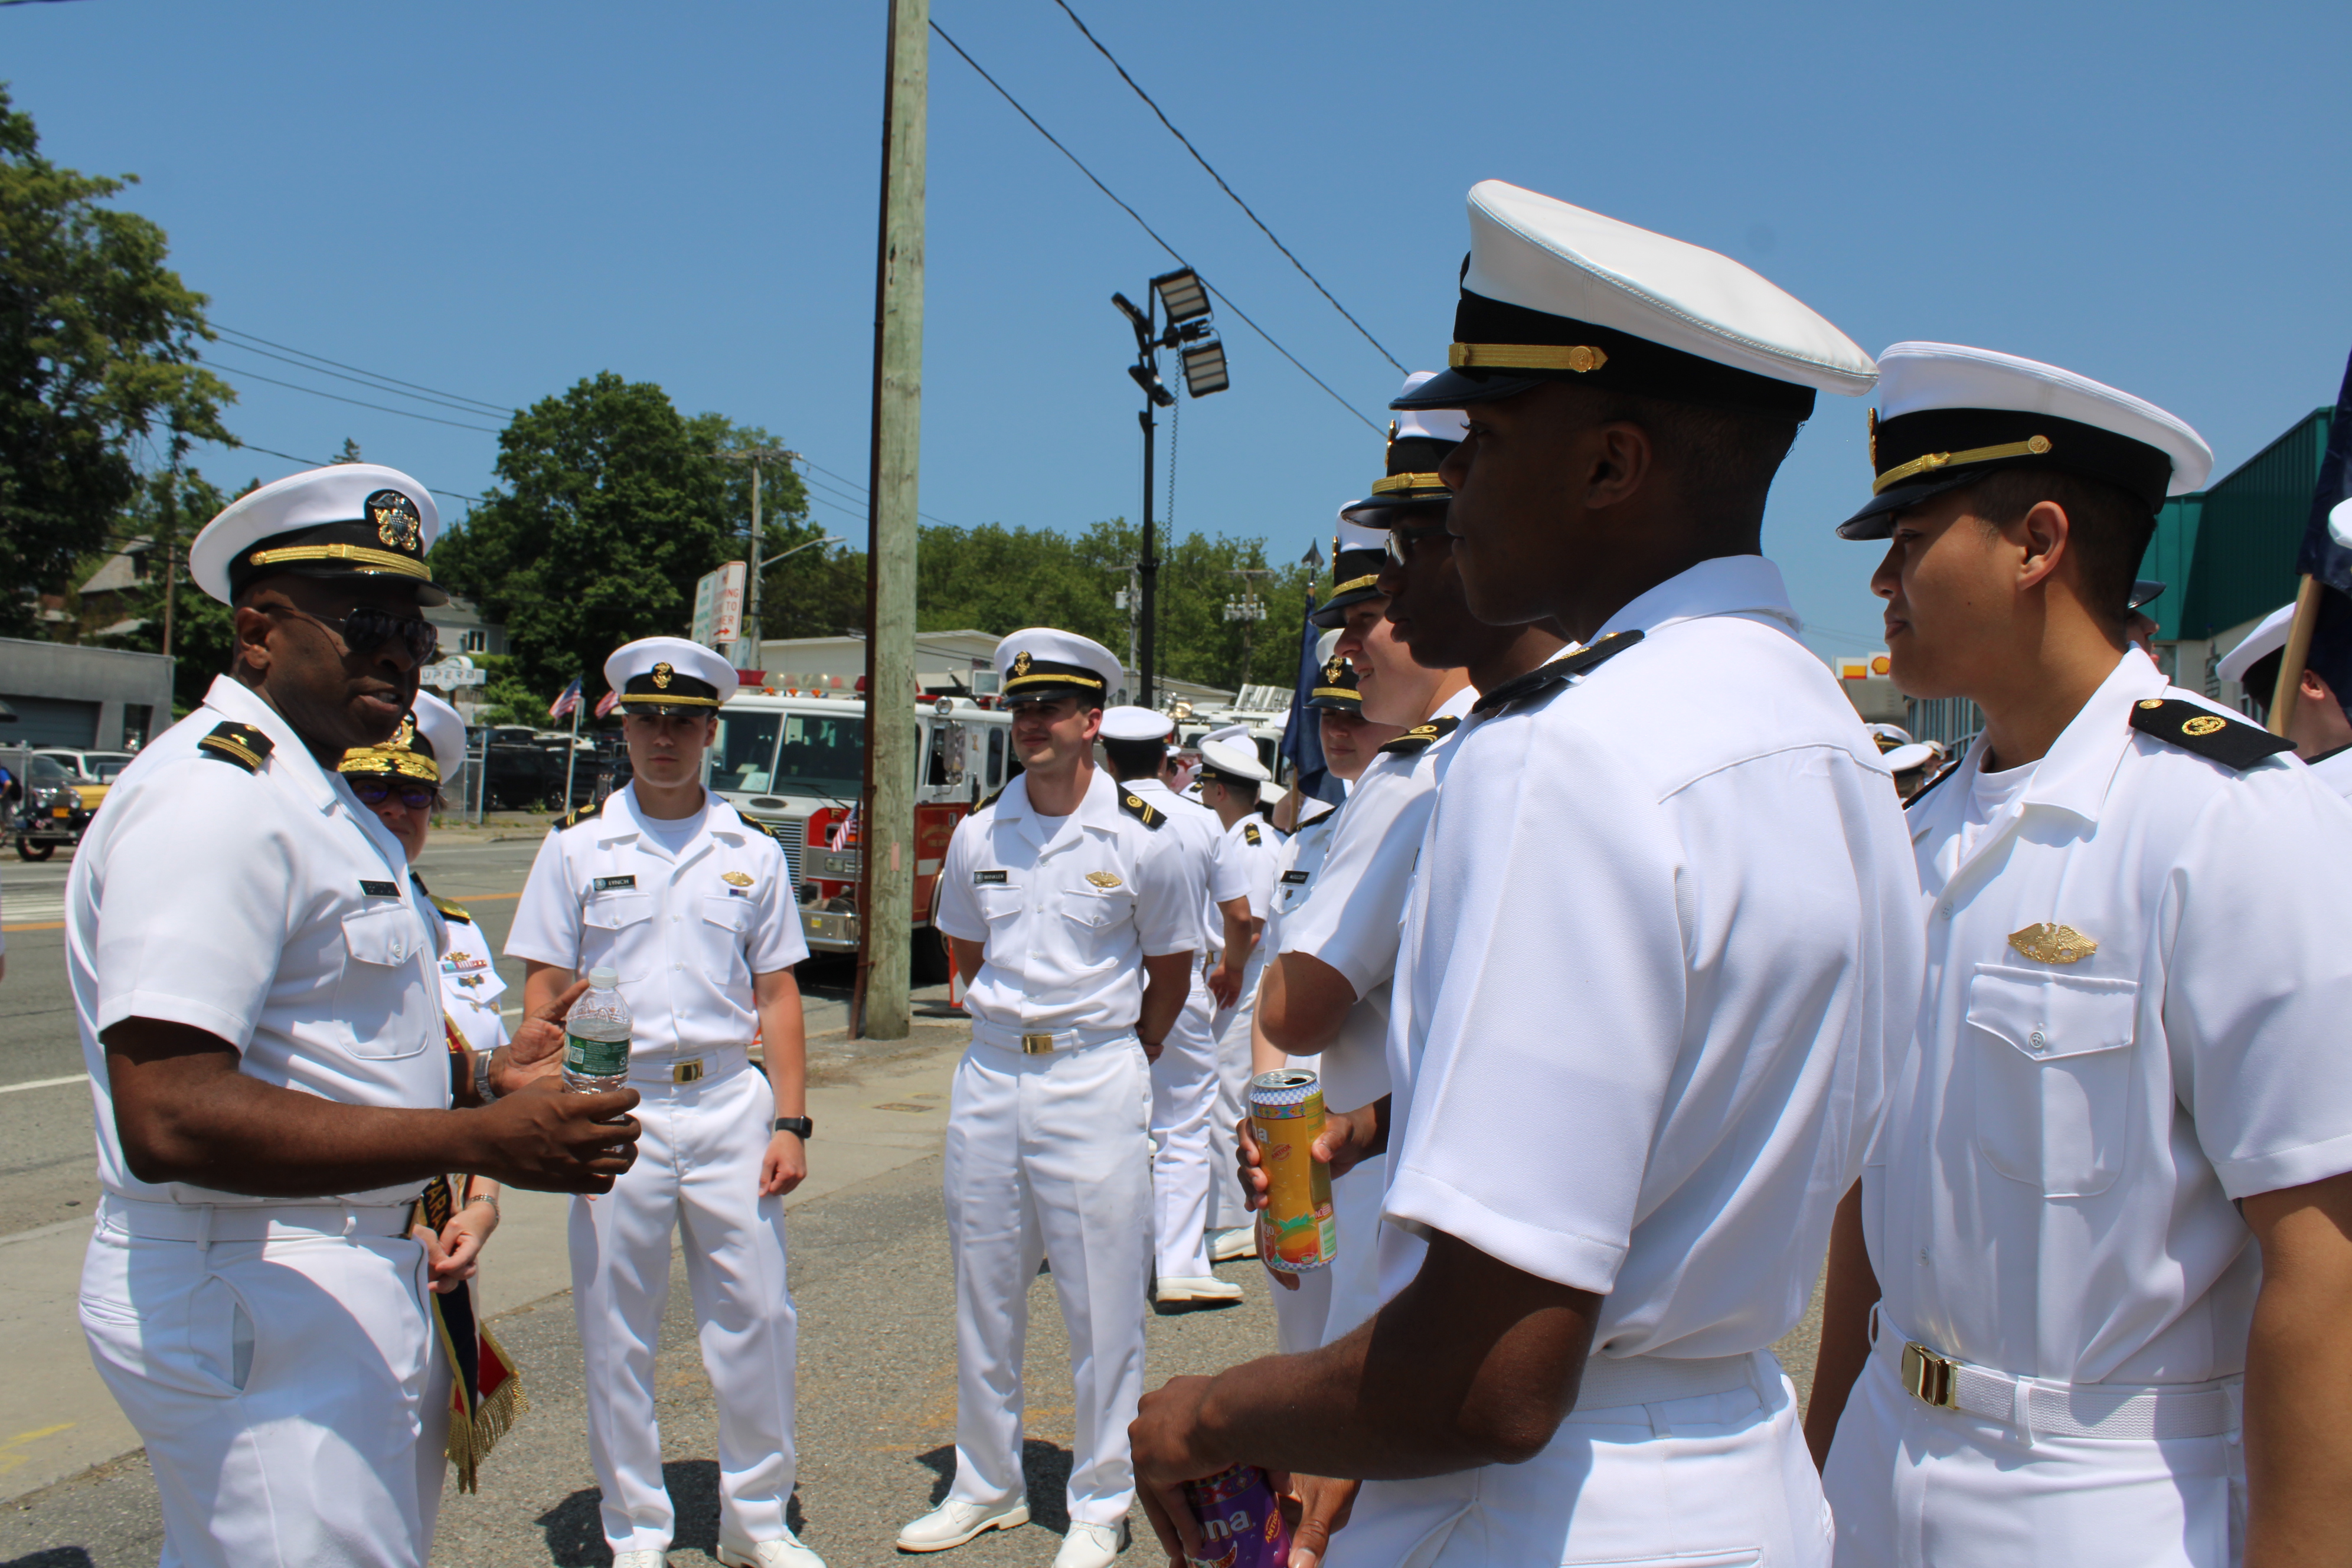 LT Mark Bristol, Navy Chaplain greets midshipmen before the parade